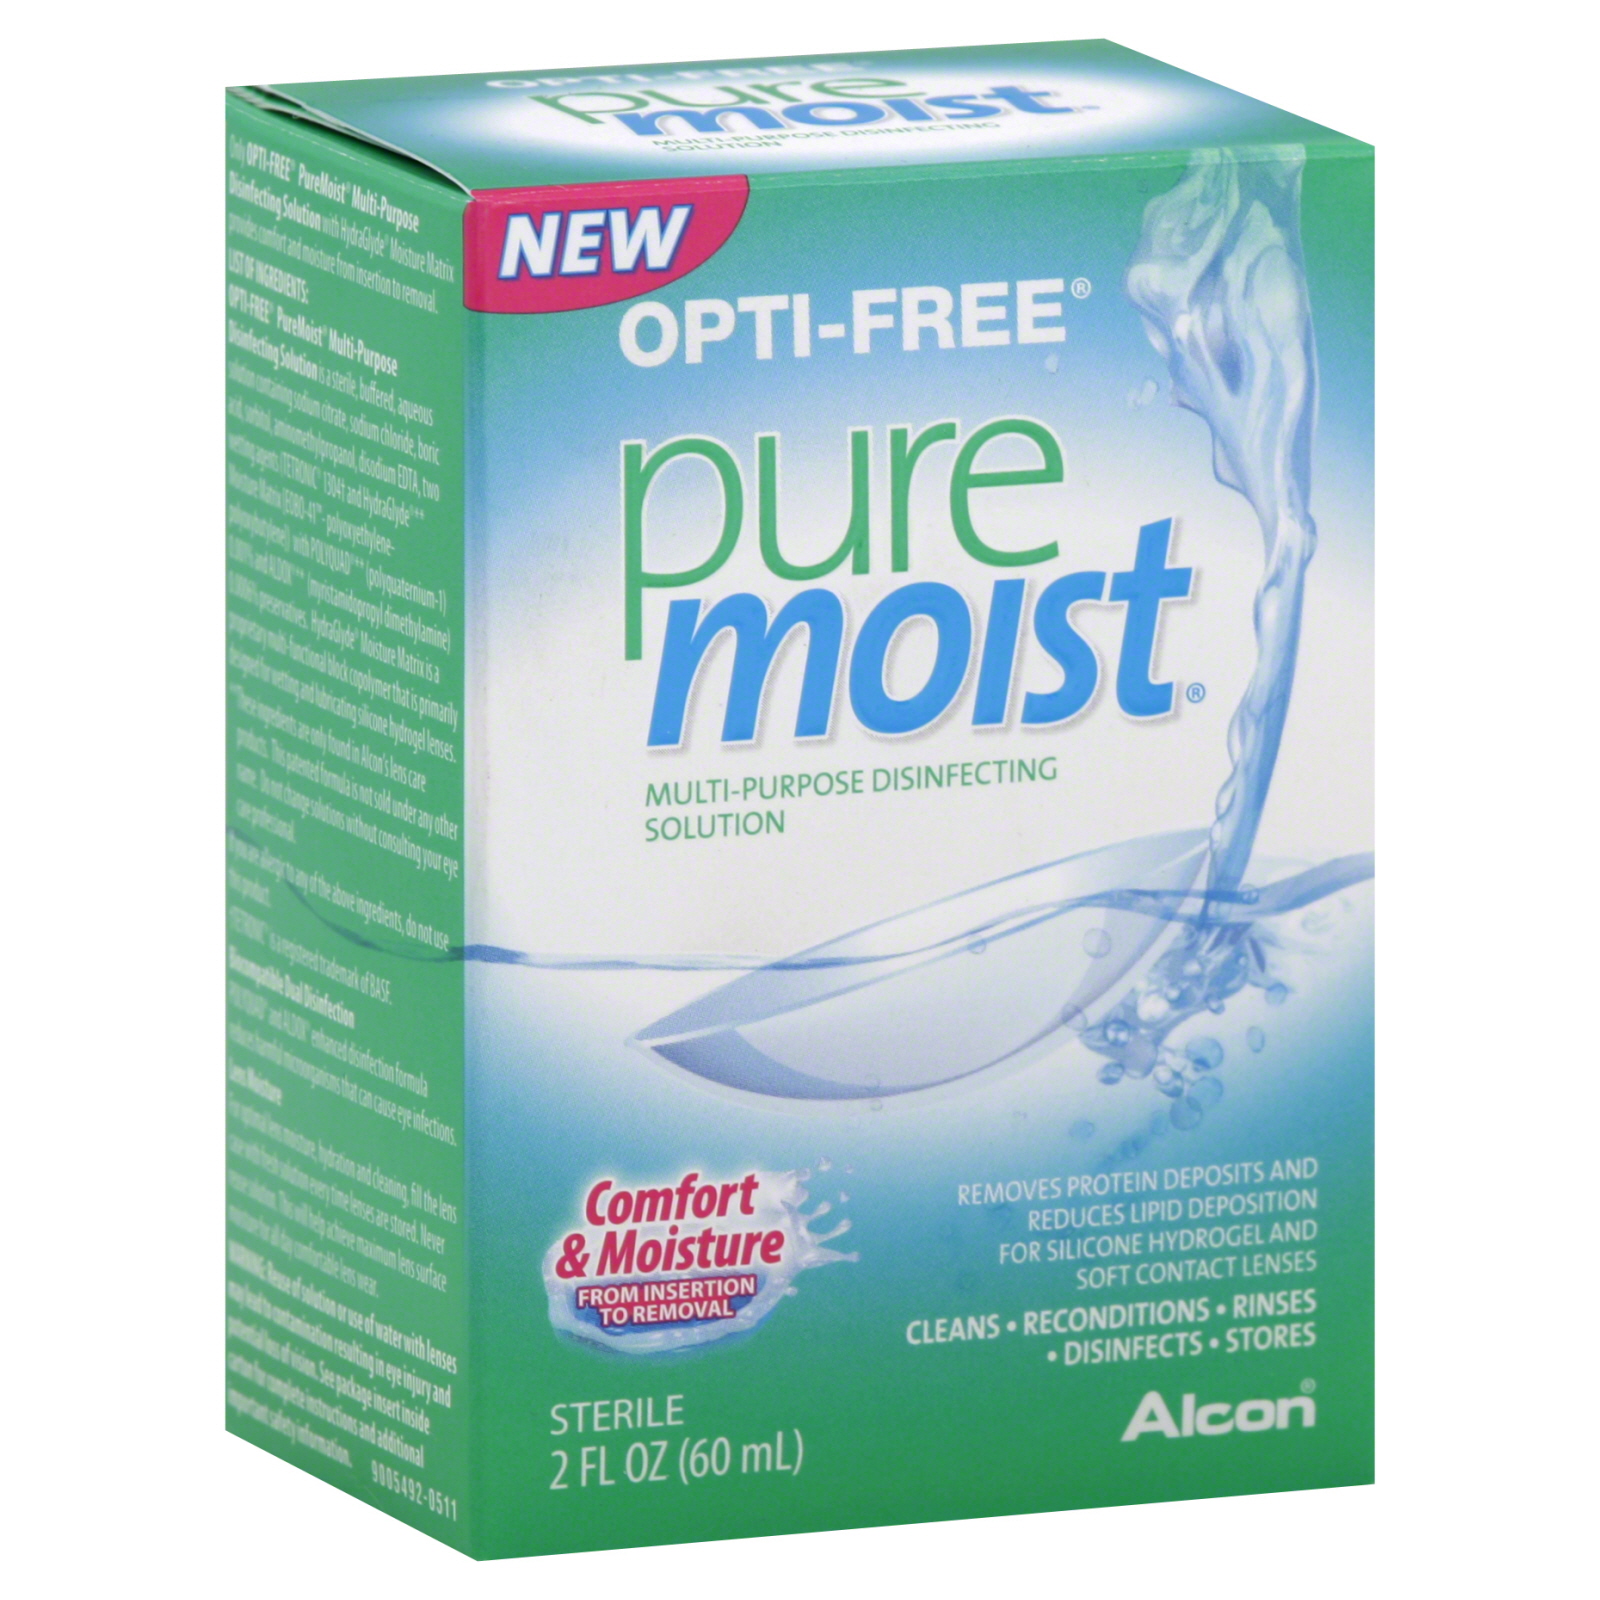 Opti-Free Pure Moist Multi Purpose Disinfecting Solution 2 fl oz